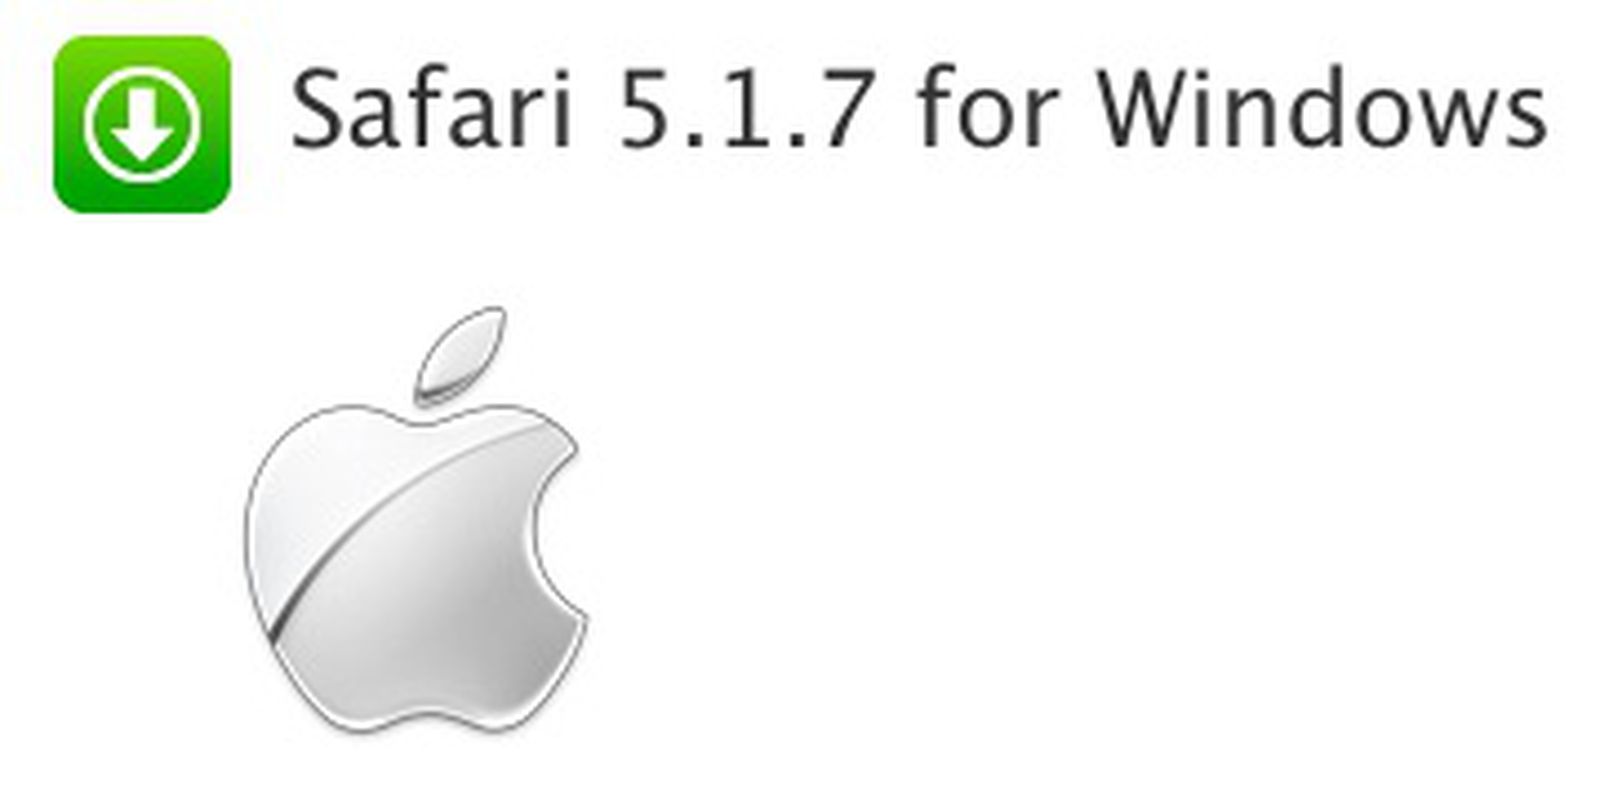 safari update for windows safari 5.1 7